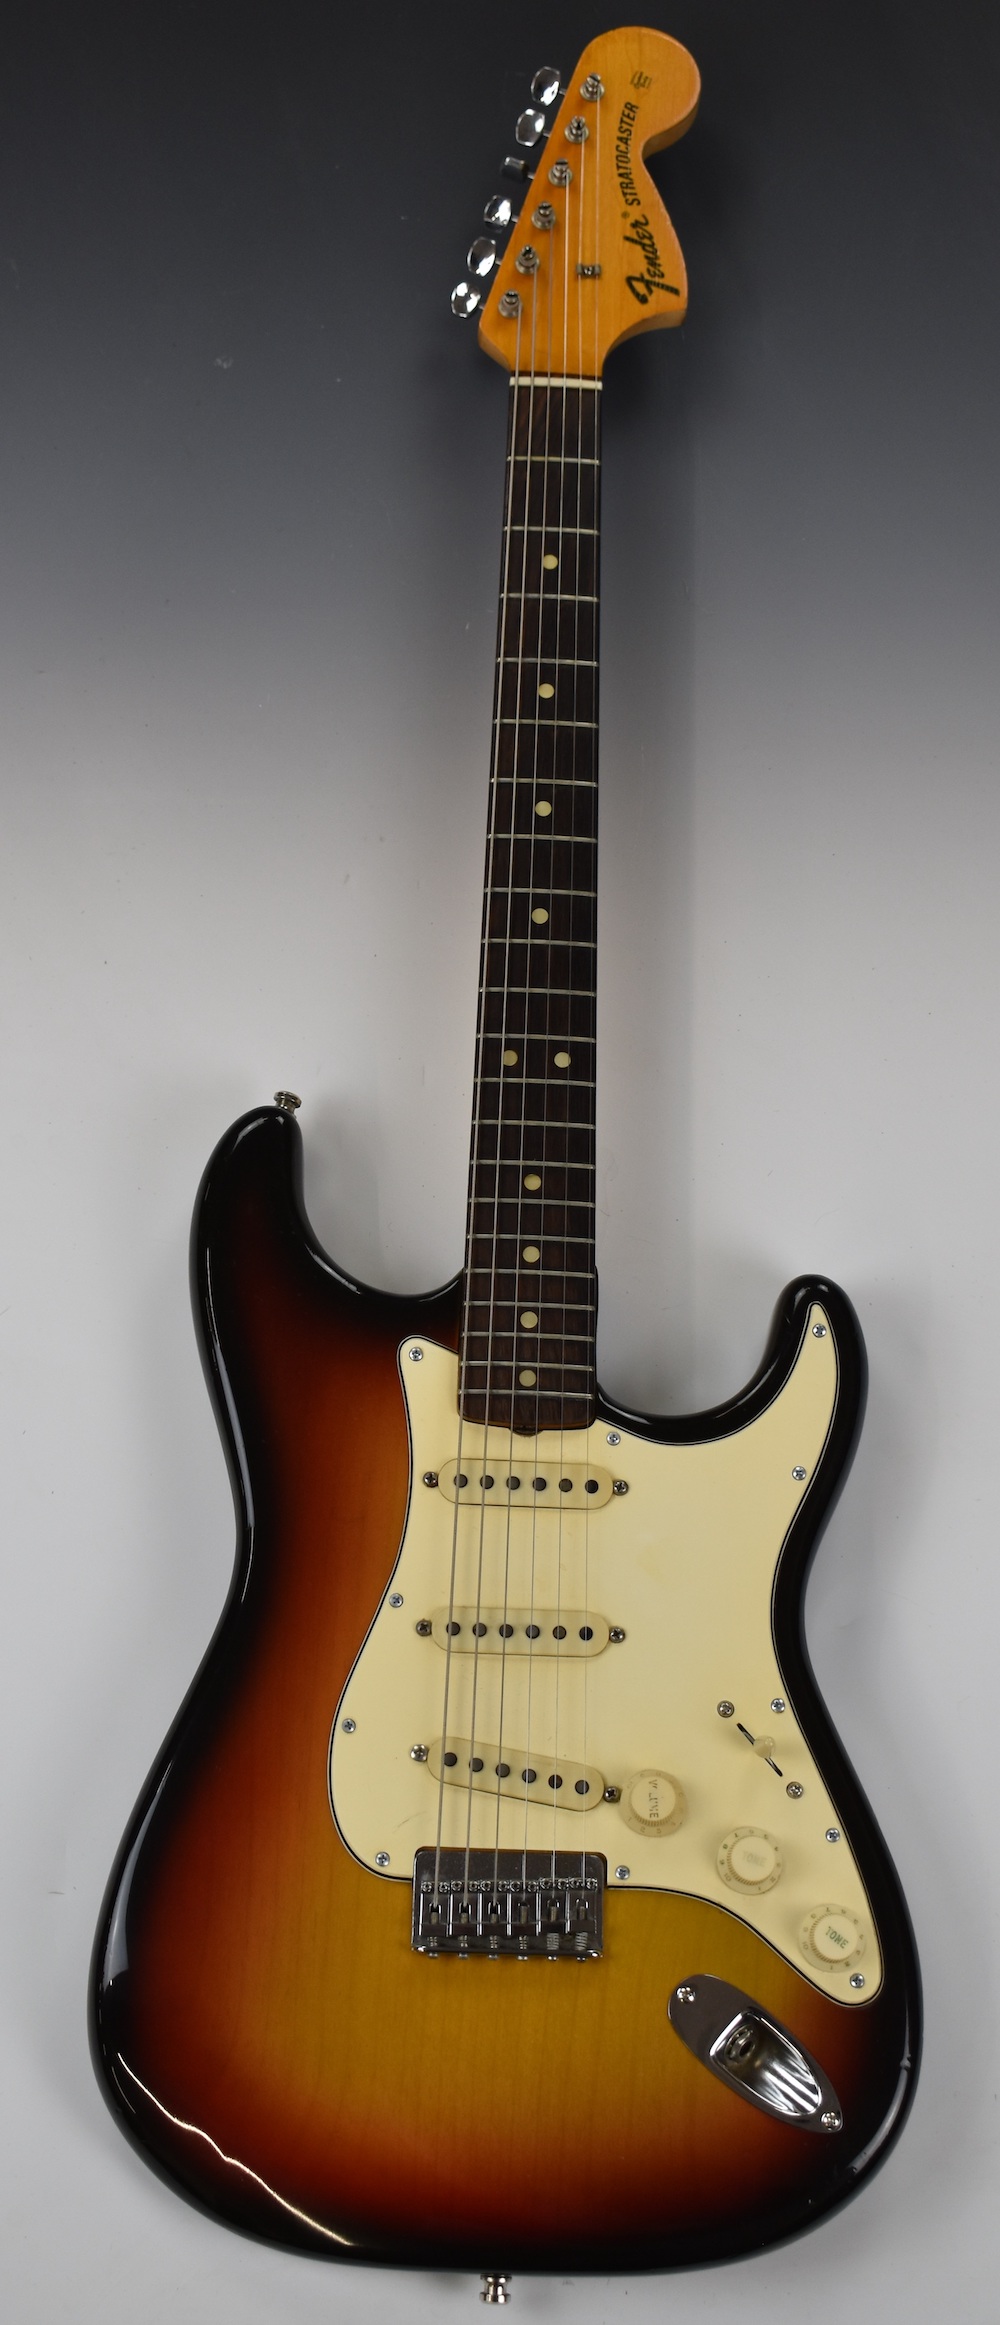 Fender 1969 Stratocaster Hardtail Electric Guitar In Lacquered Sunburst Finish Sold Ś6,900